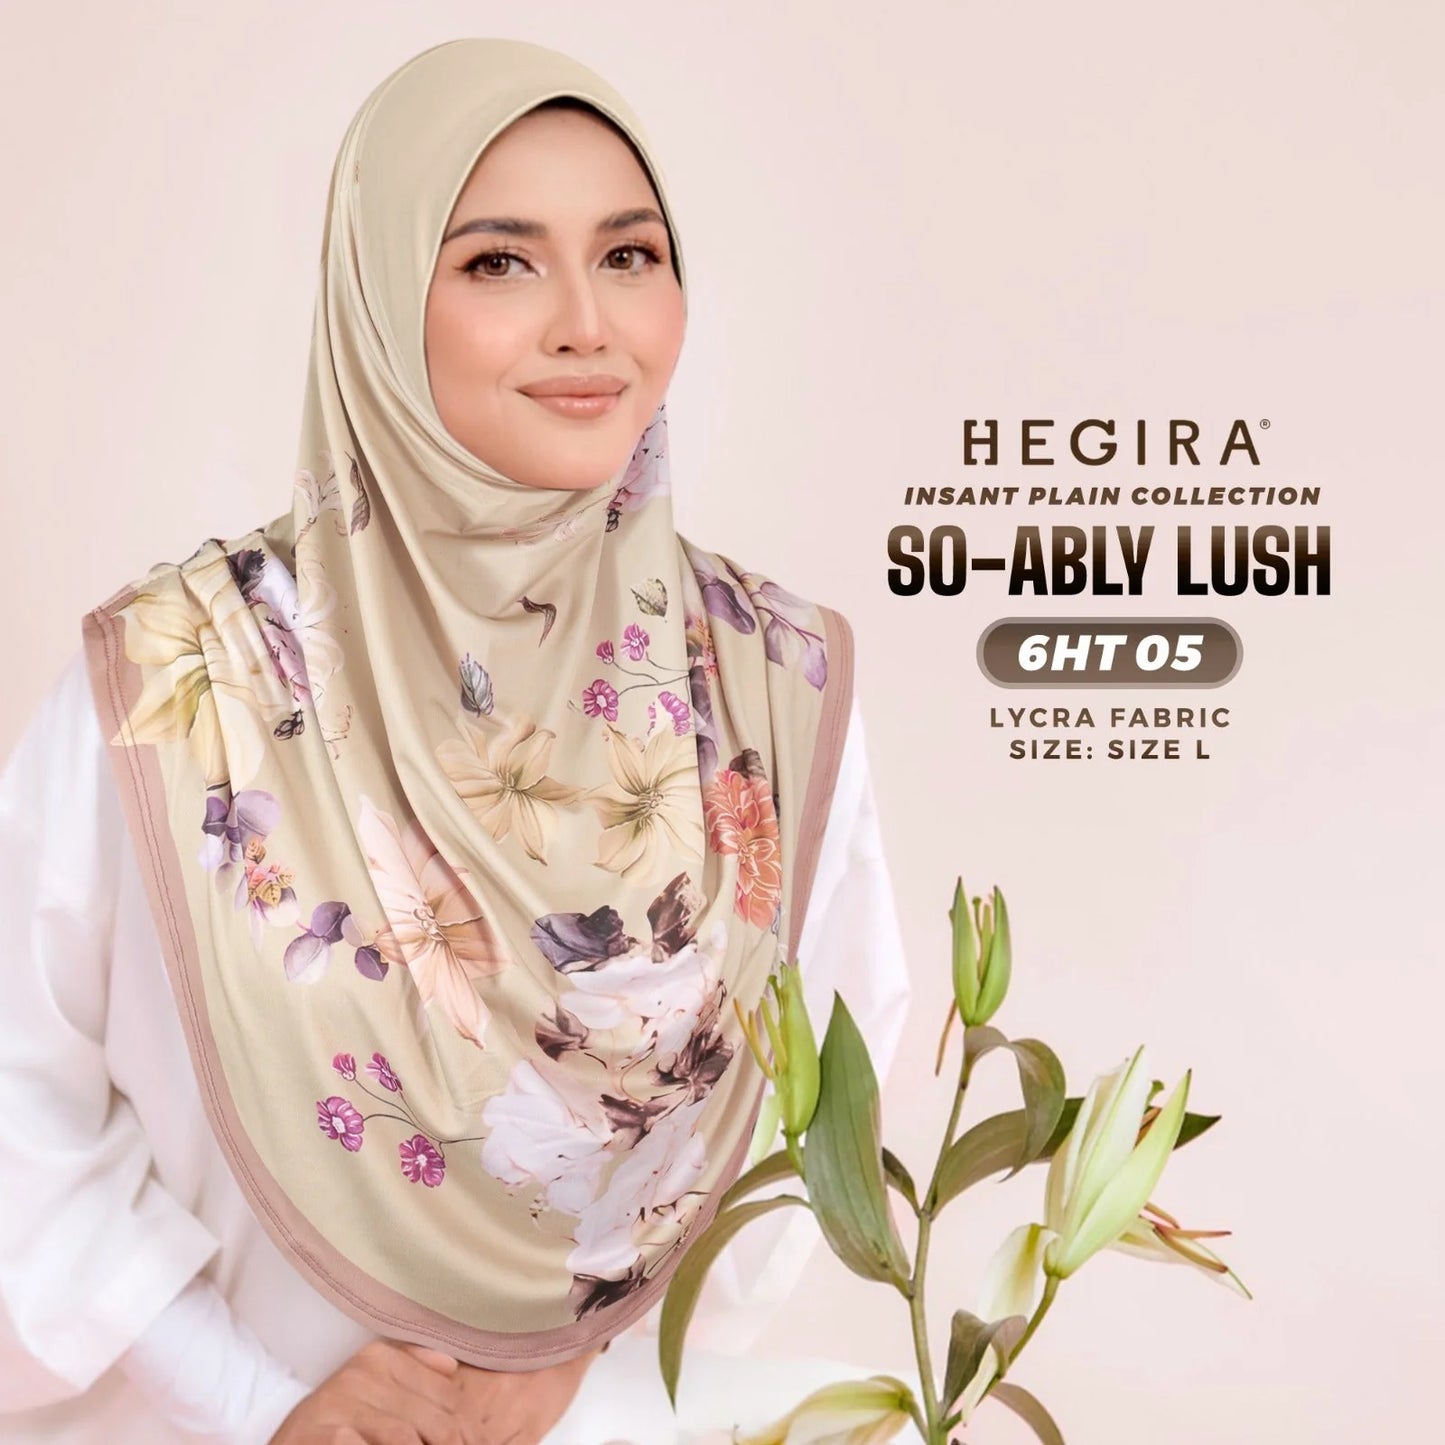 So- Ably Lush Instant Hijab